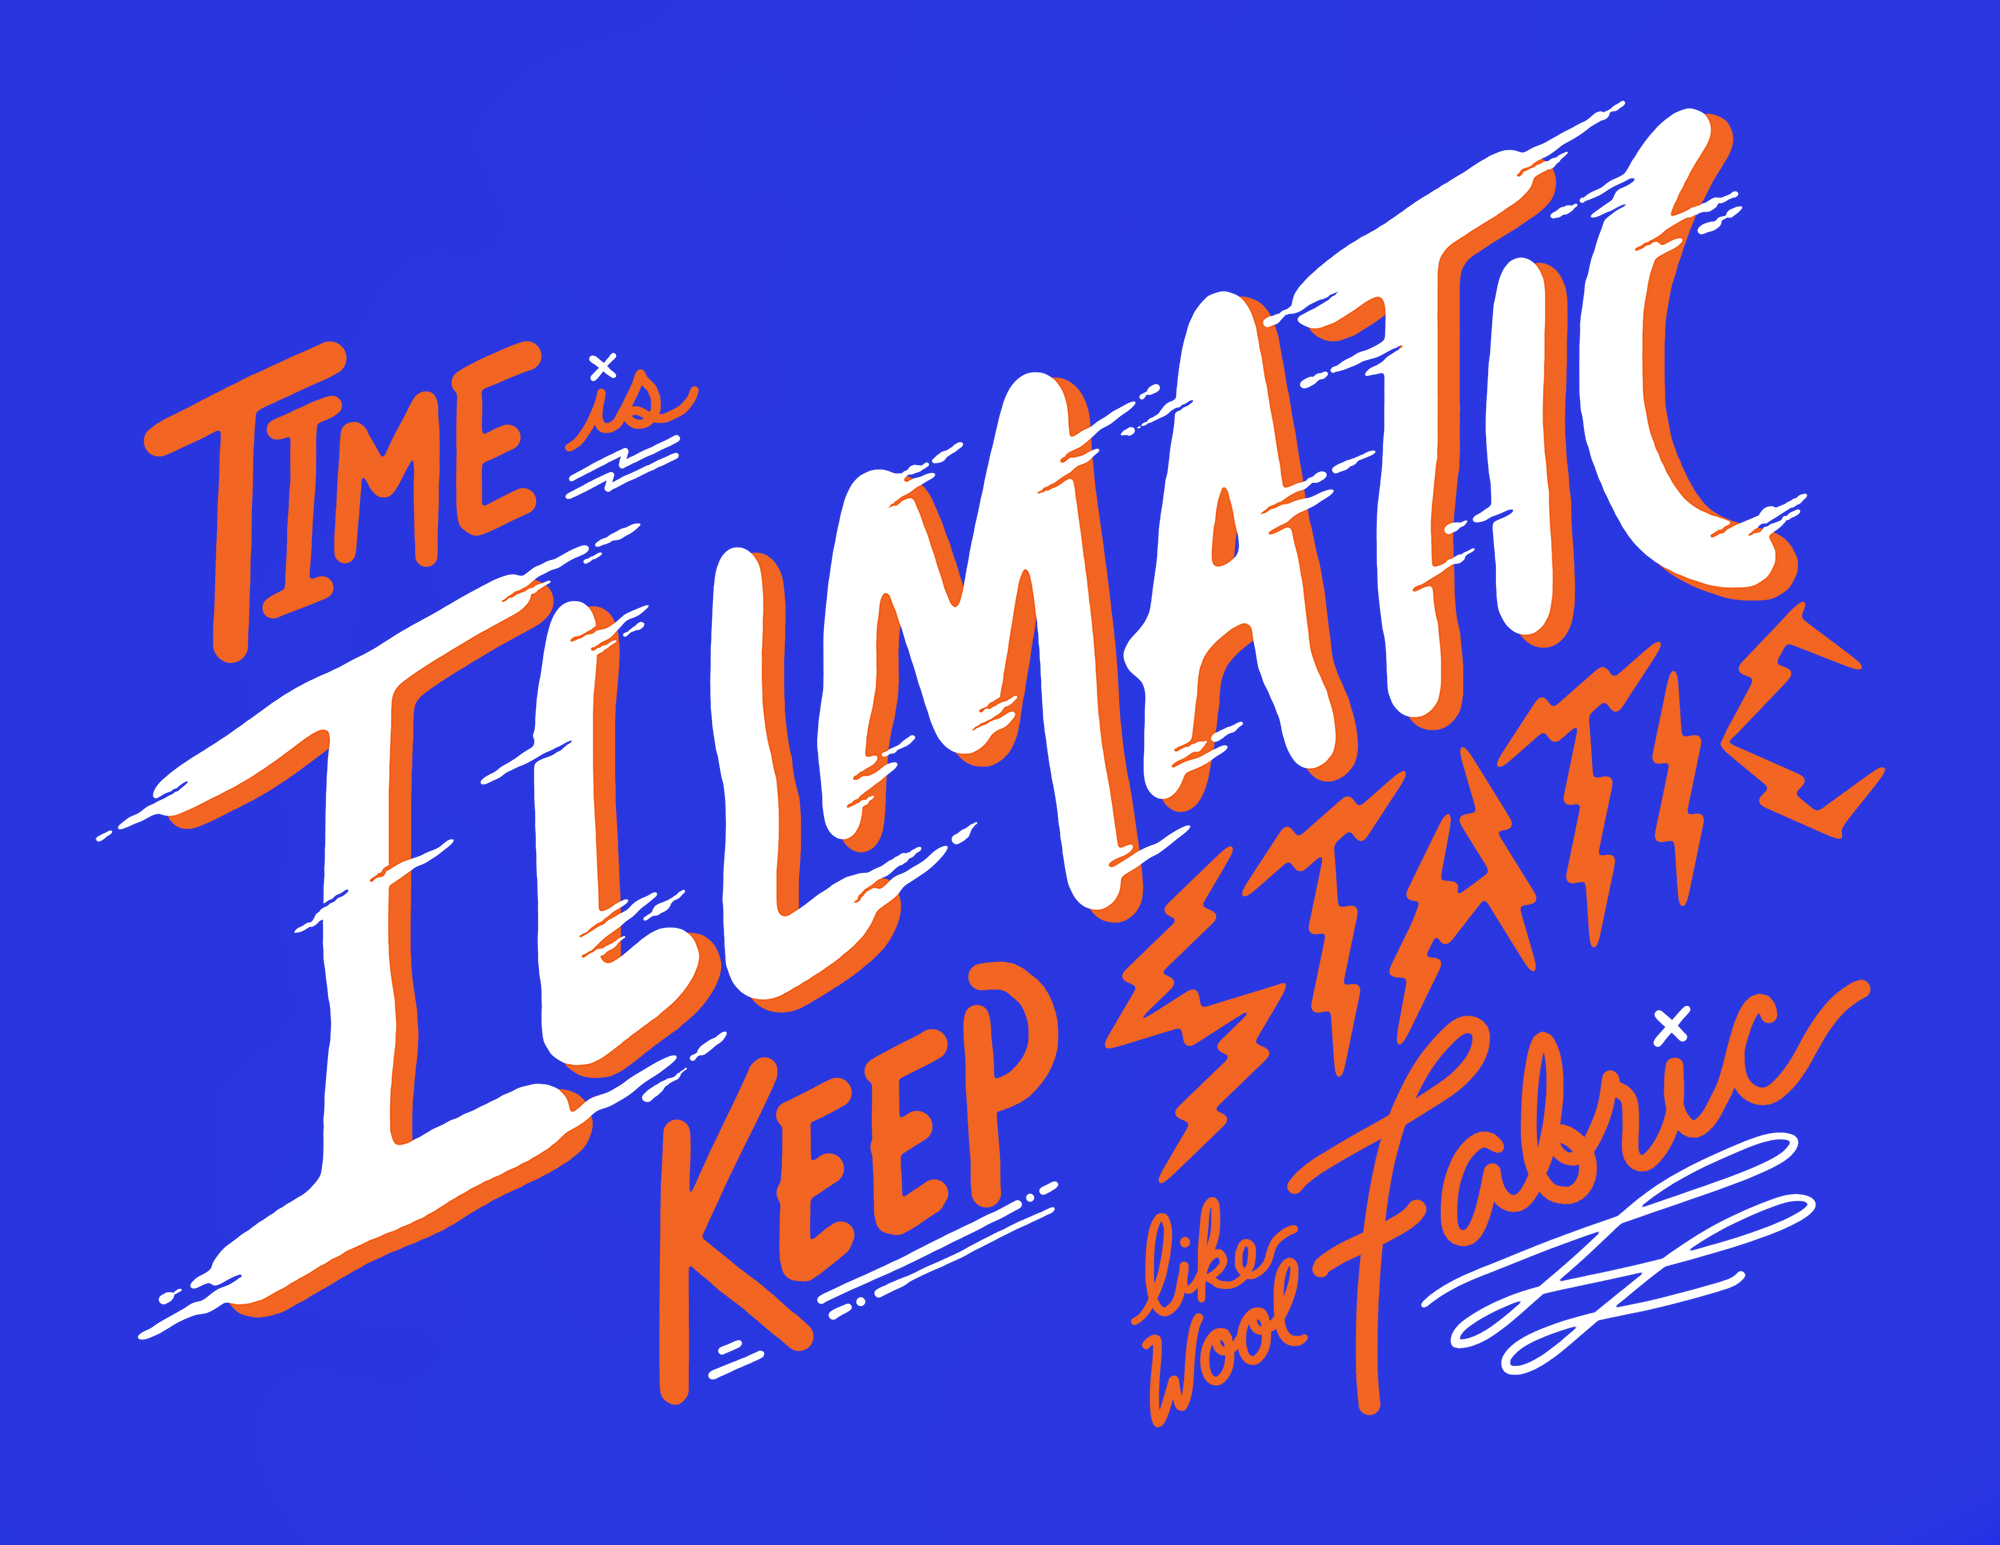 illmatic logo